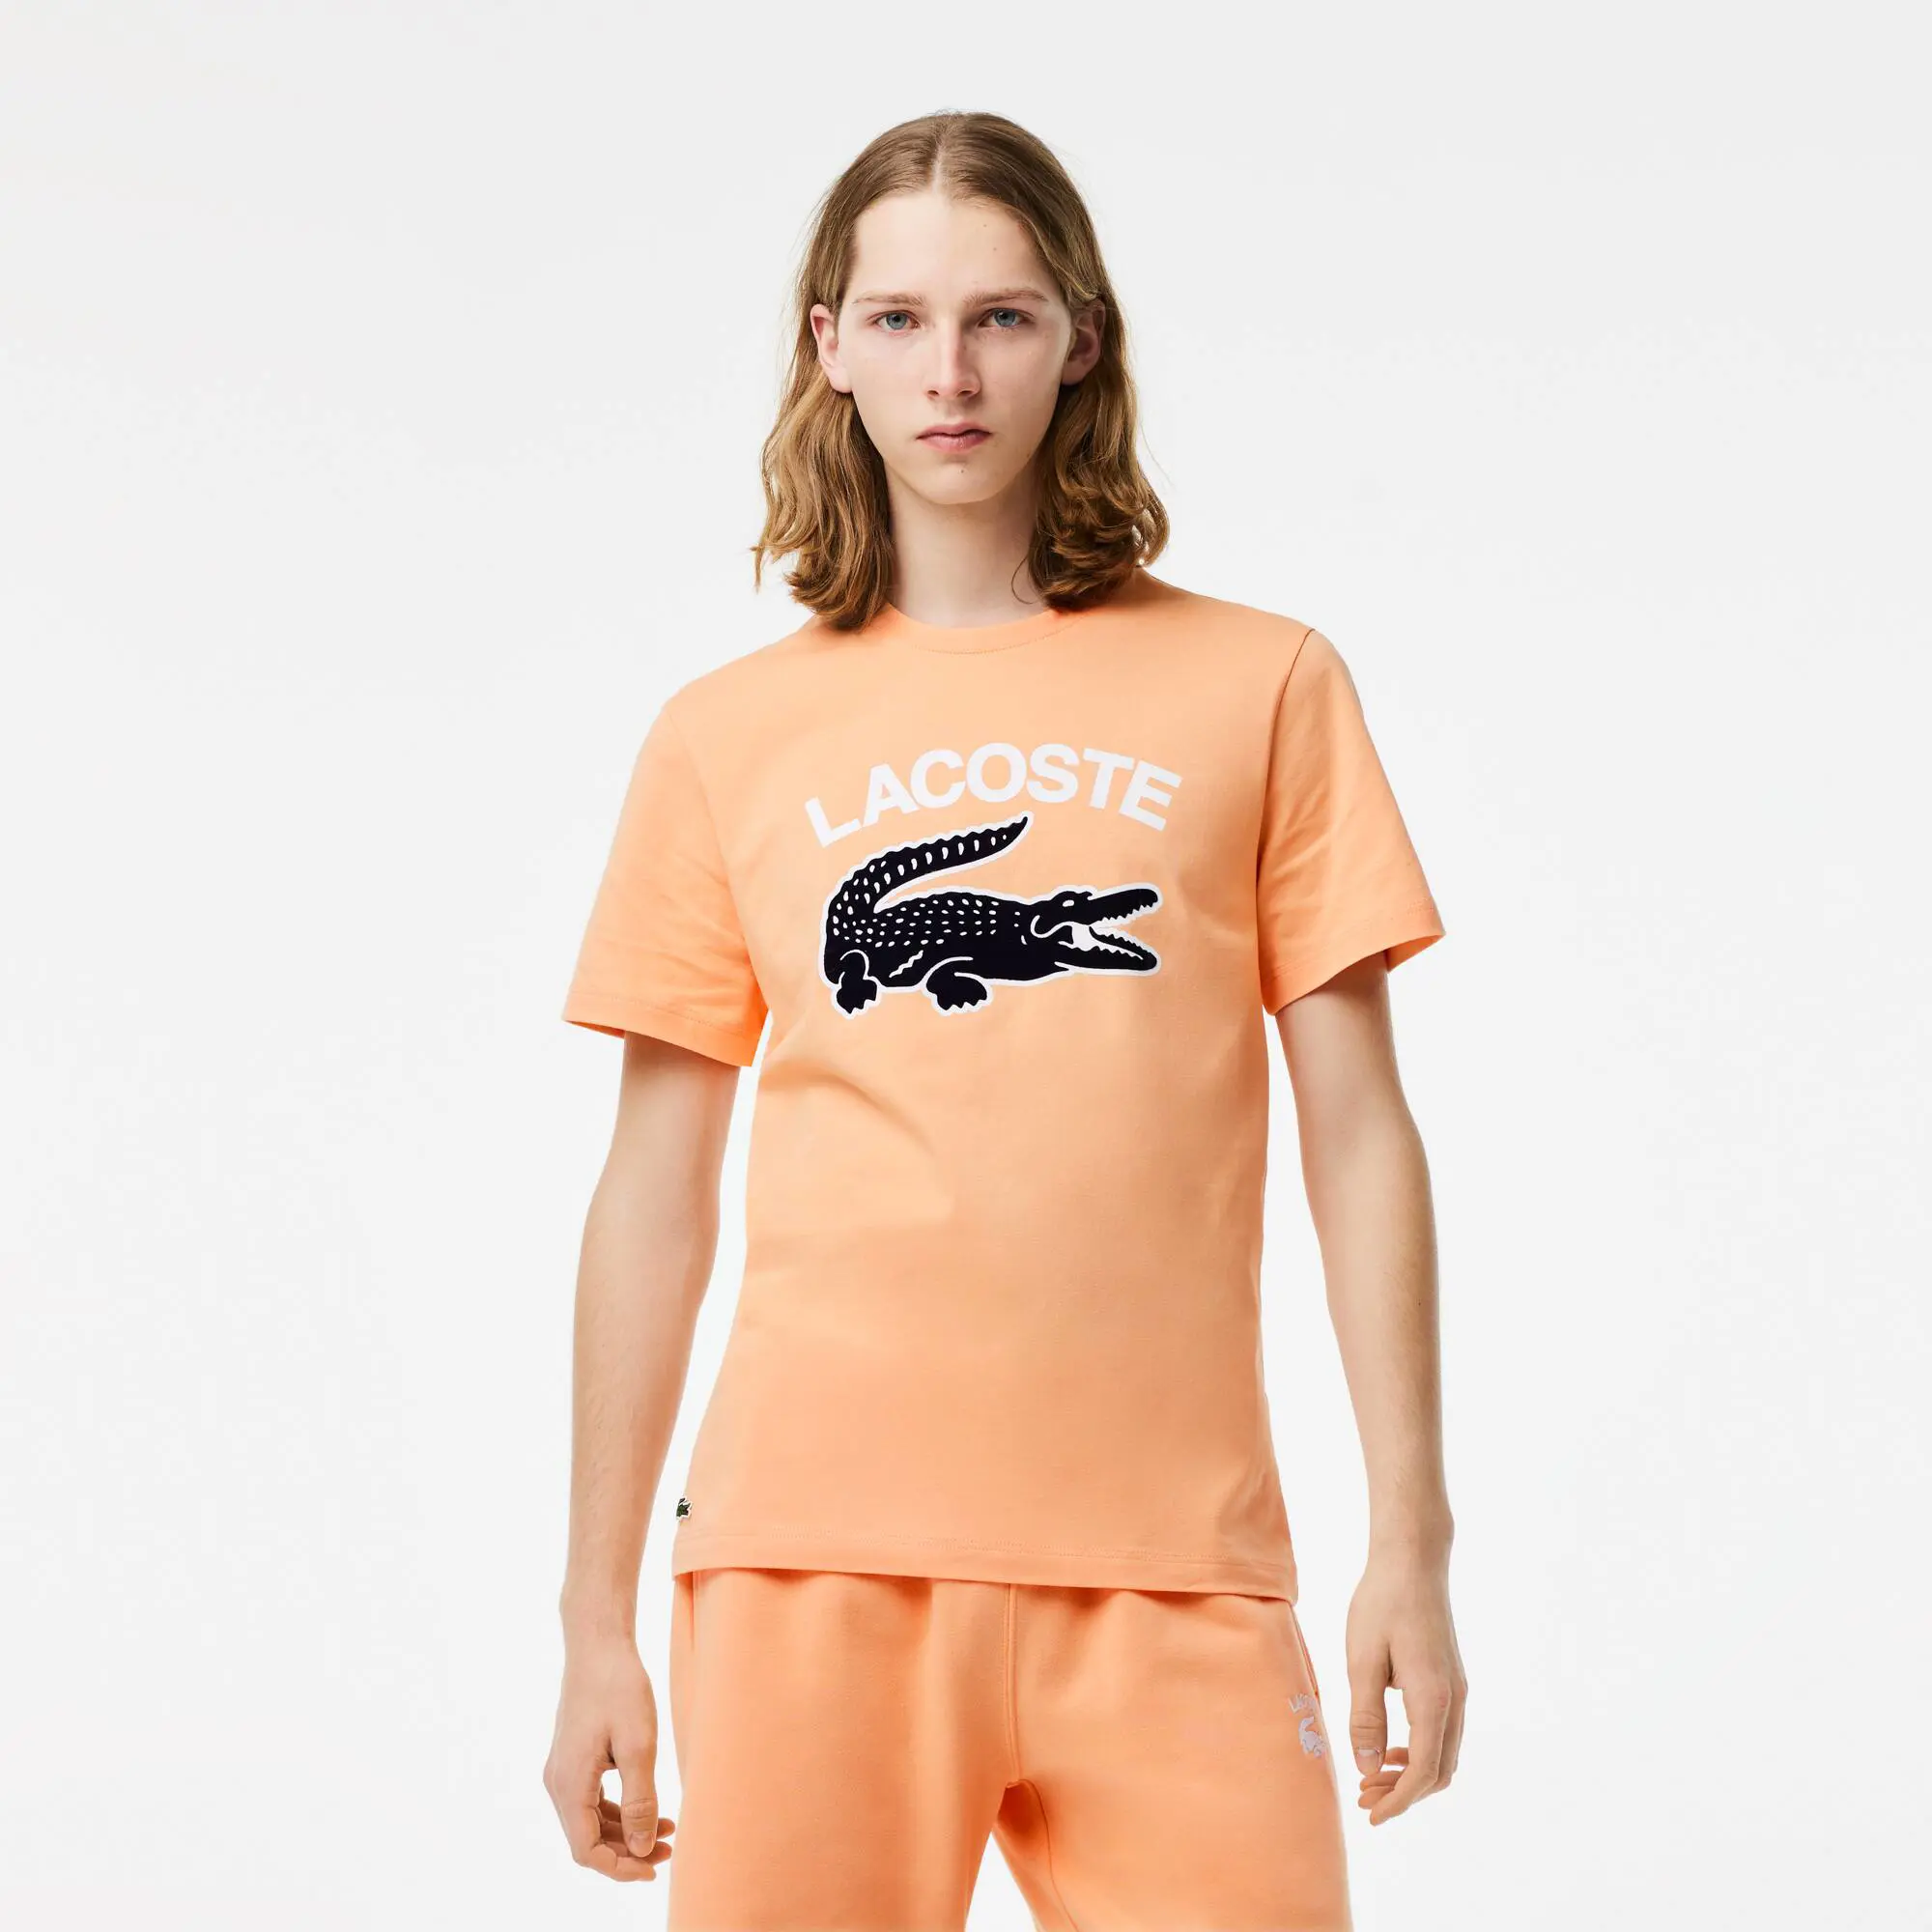 Lacoste T-shirt regular fit com estampado de crocodilo XL Lacoste para homem. 1